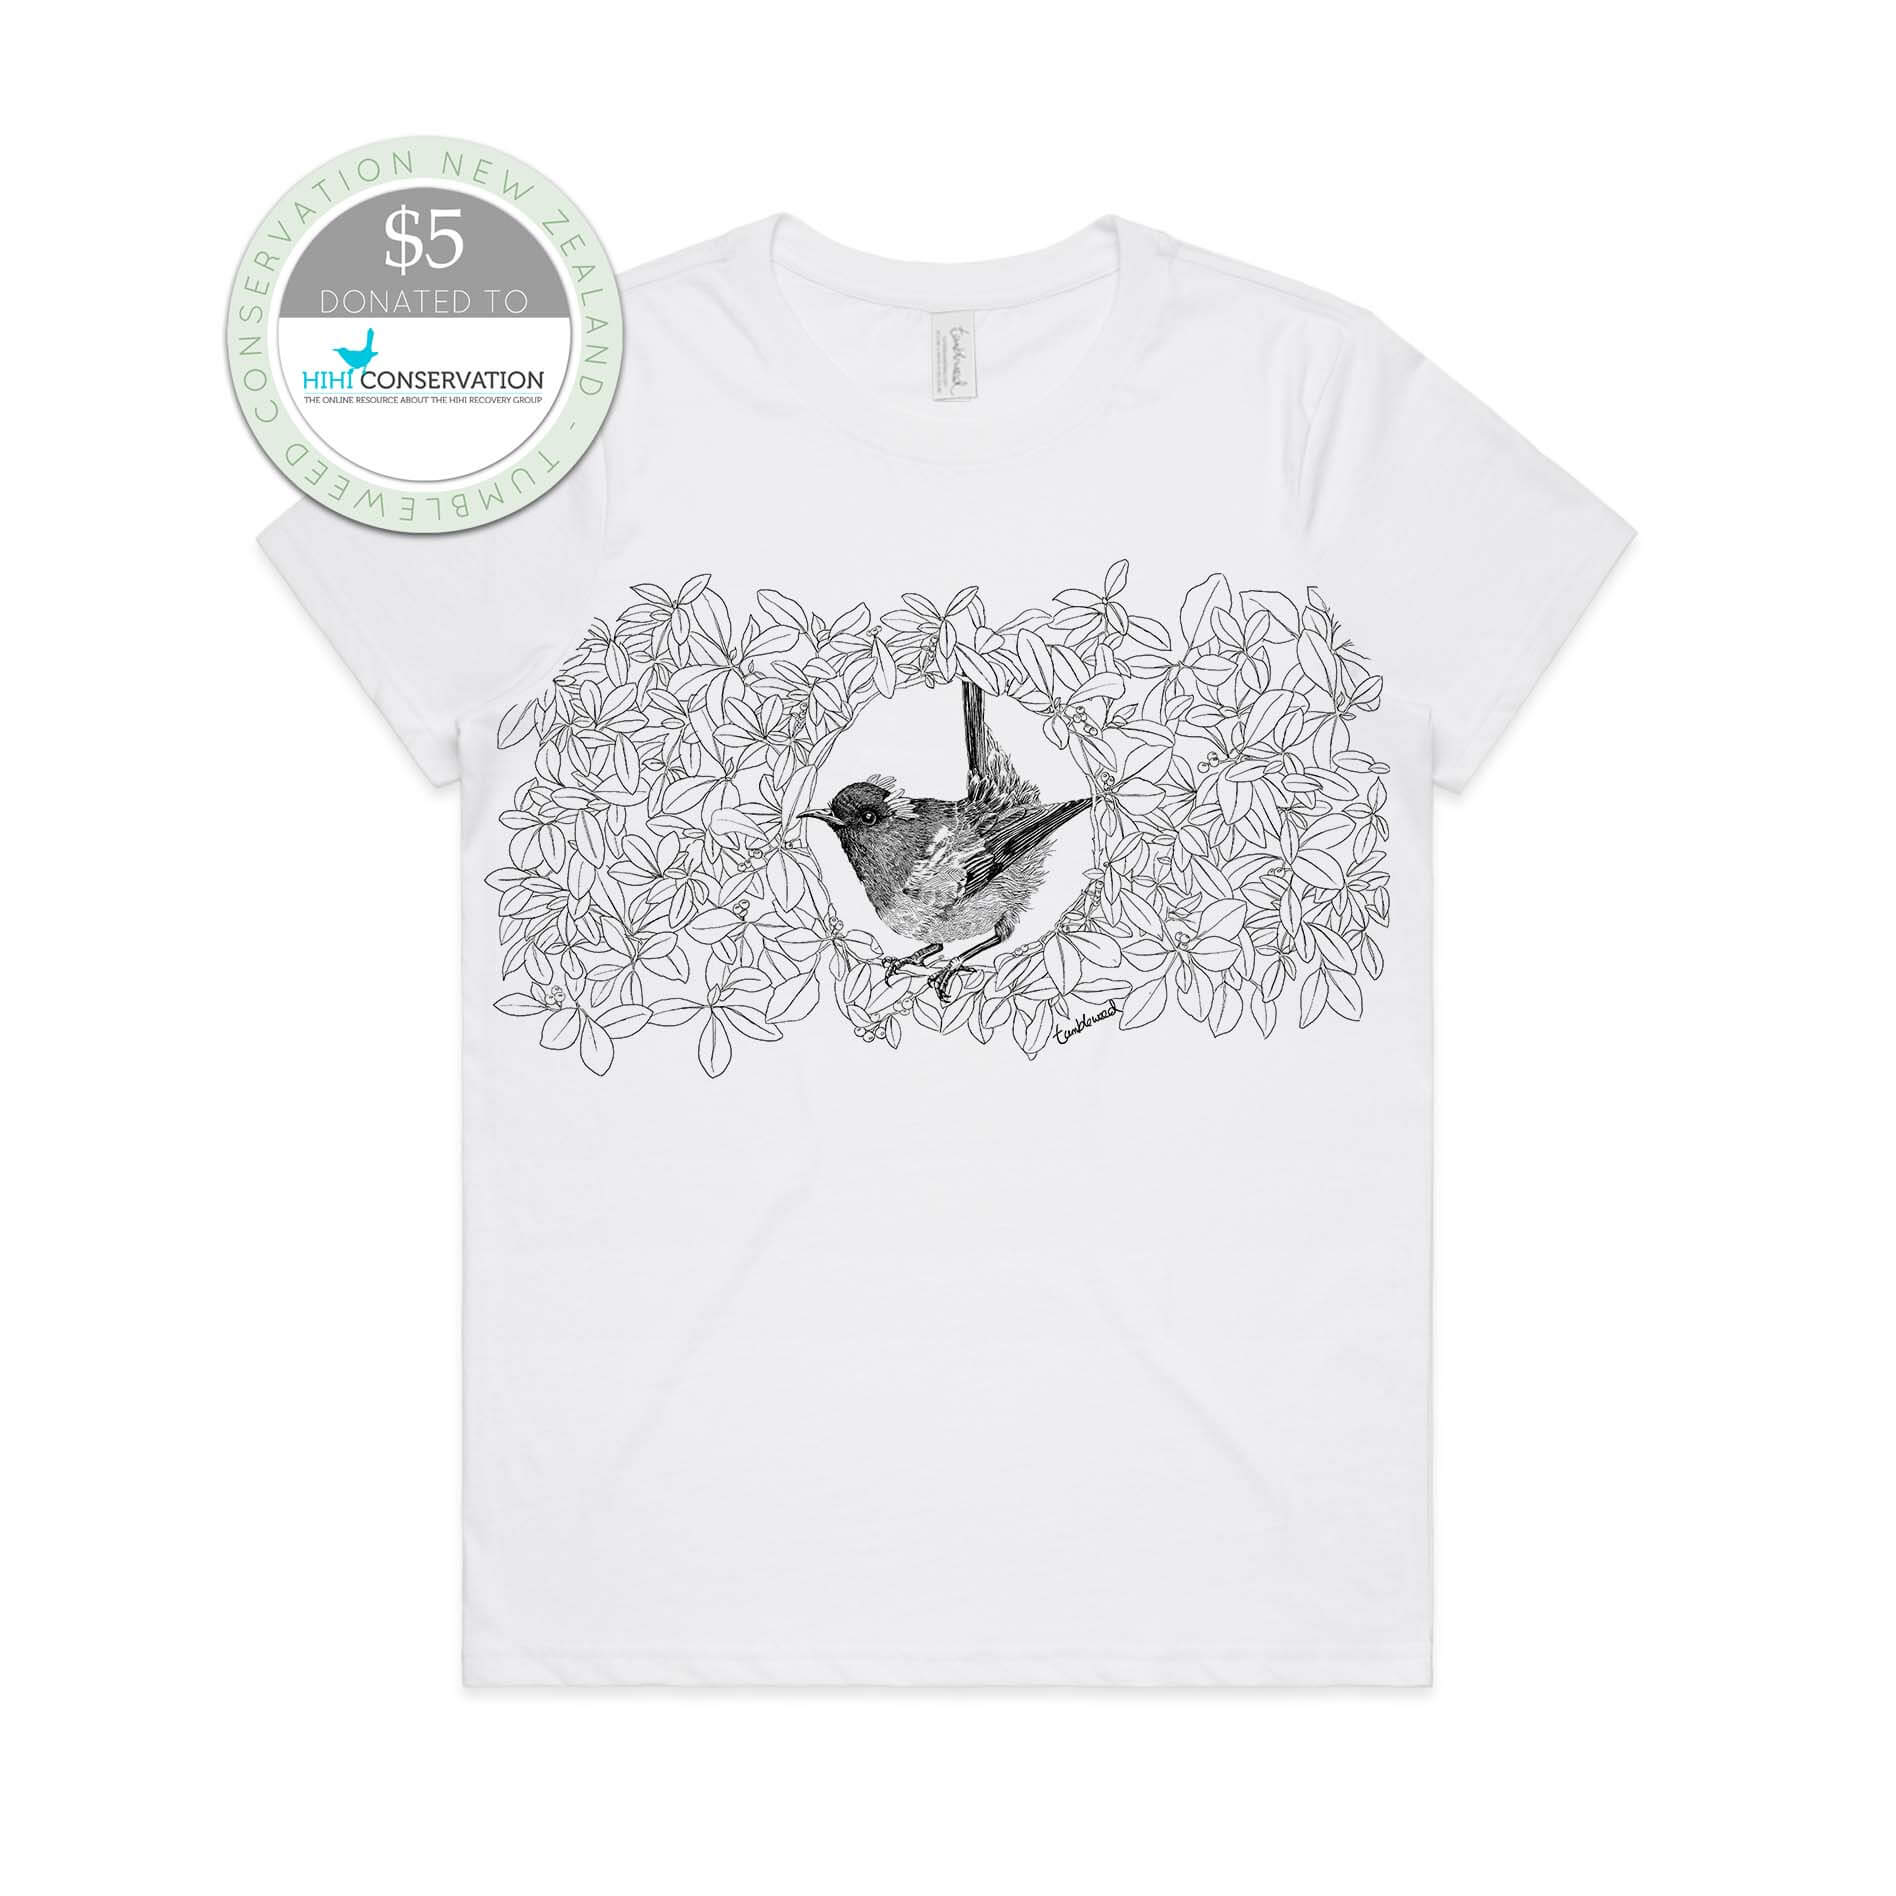 White, female t-shirt featuring a screen printed Hihi/Stitchbird design.